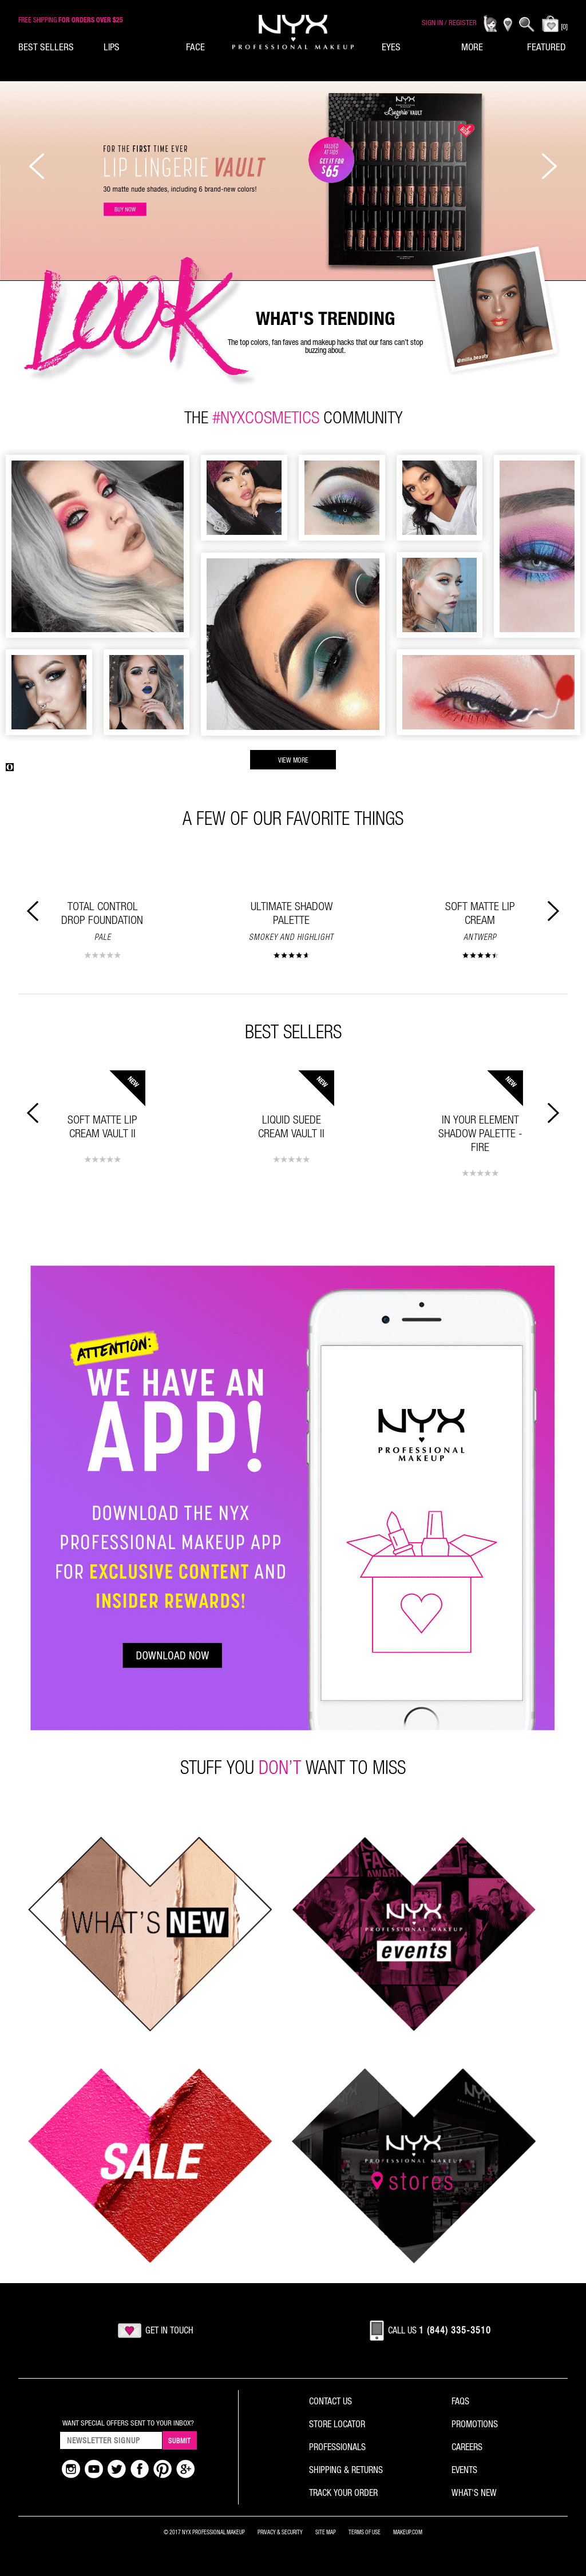 NYX Mobile Logo - NYX Cosmetics Competitors, Revenue and Employees Company Profile